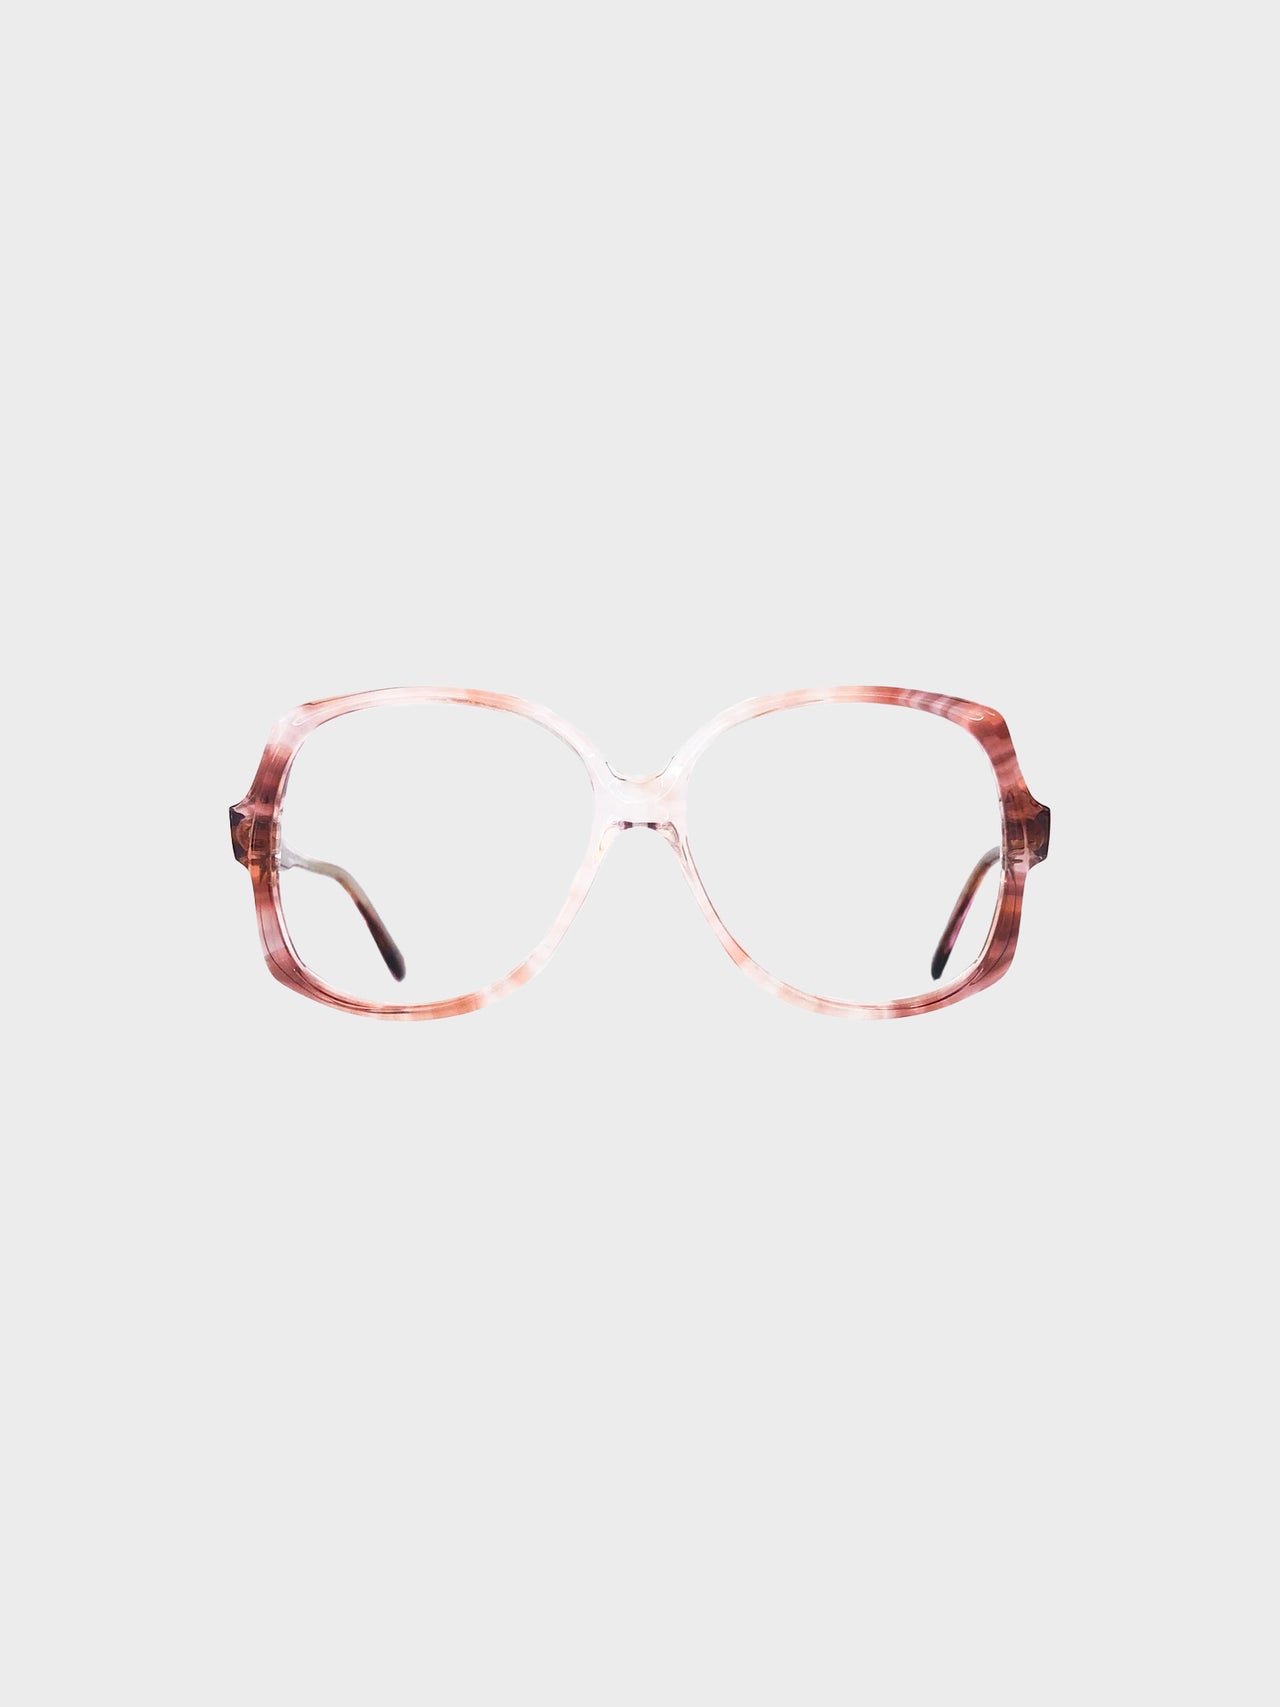 FRENCH VINTAGE / Clear glasses (PINK BROWN) #FV08